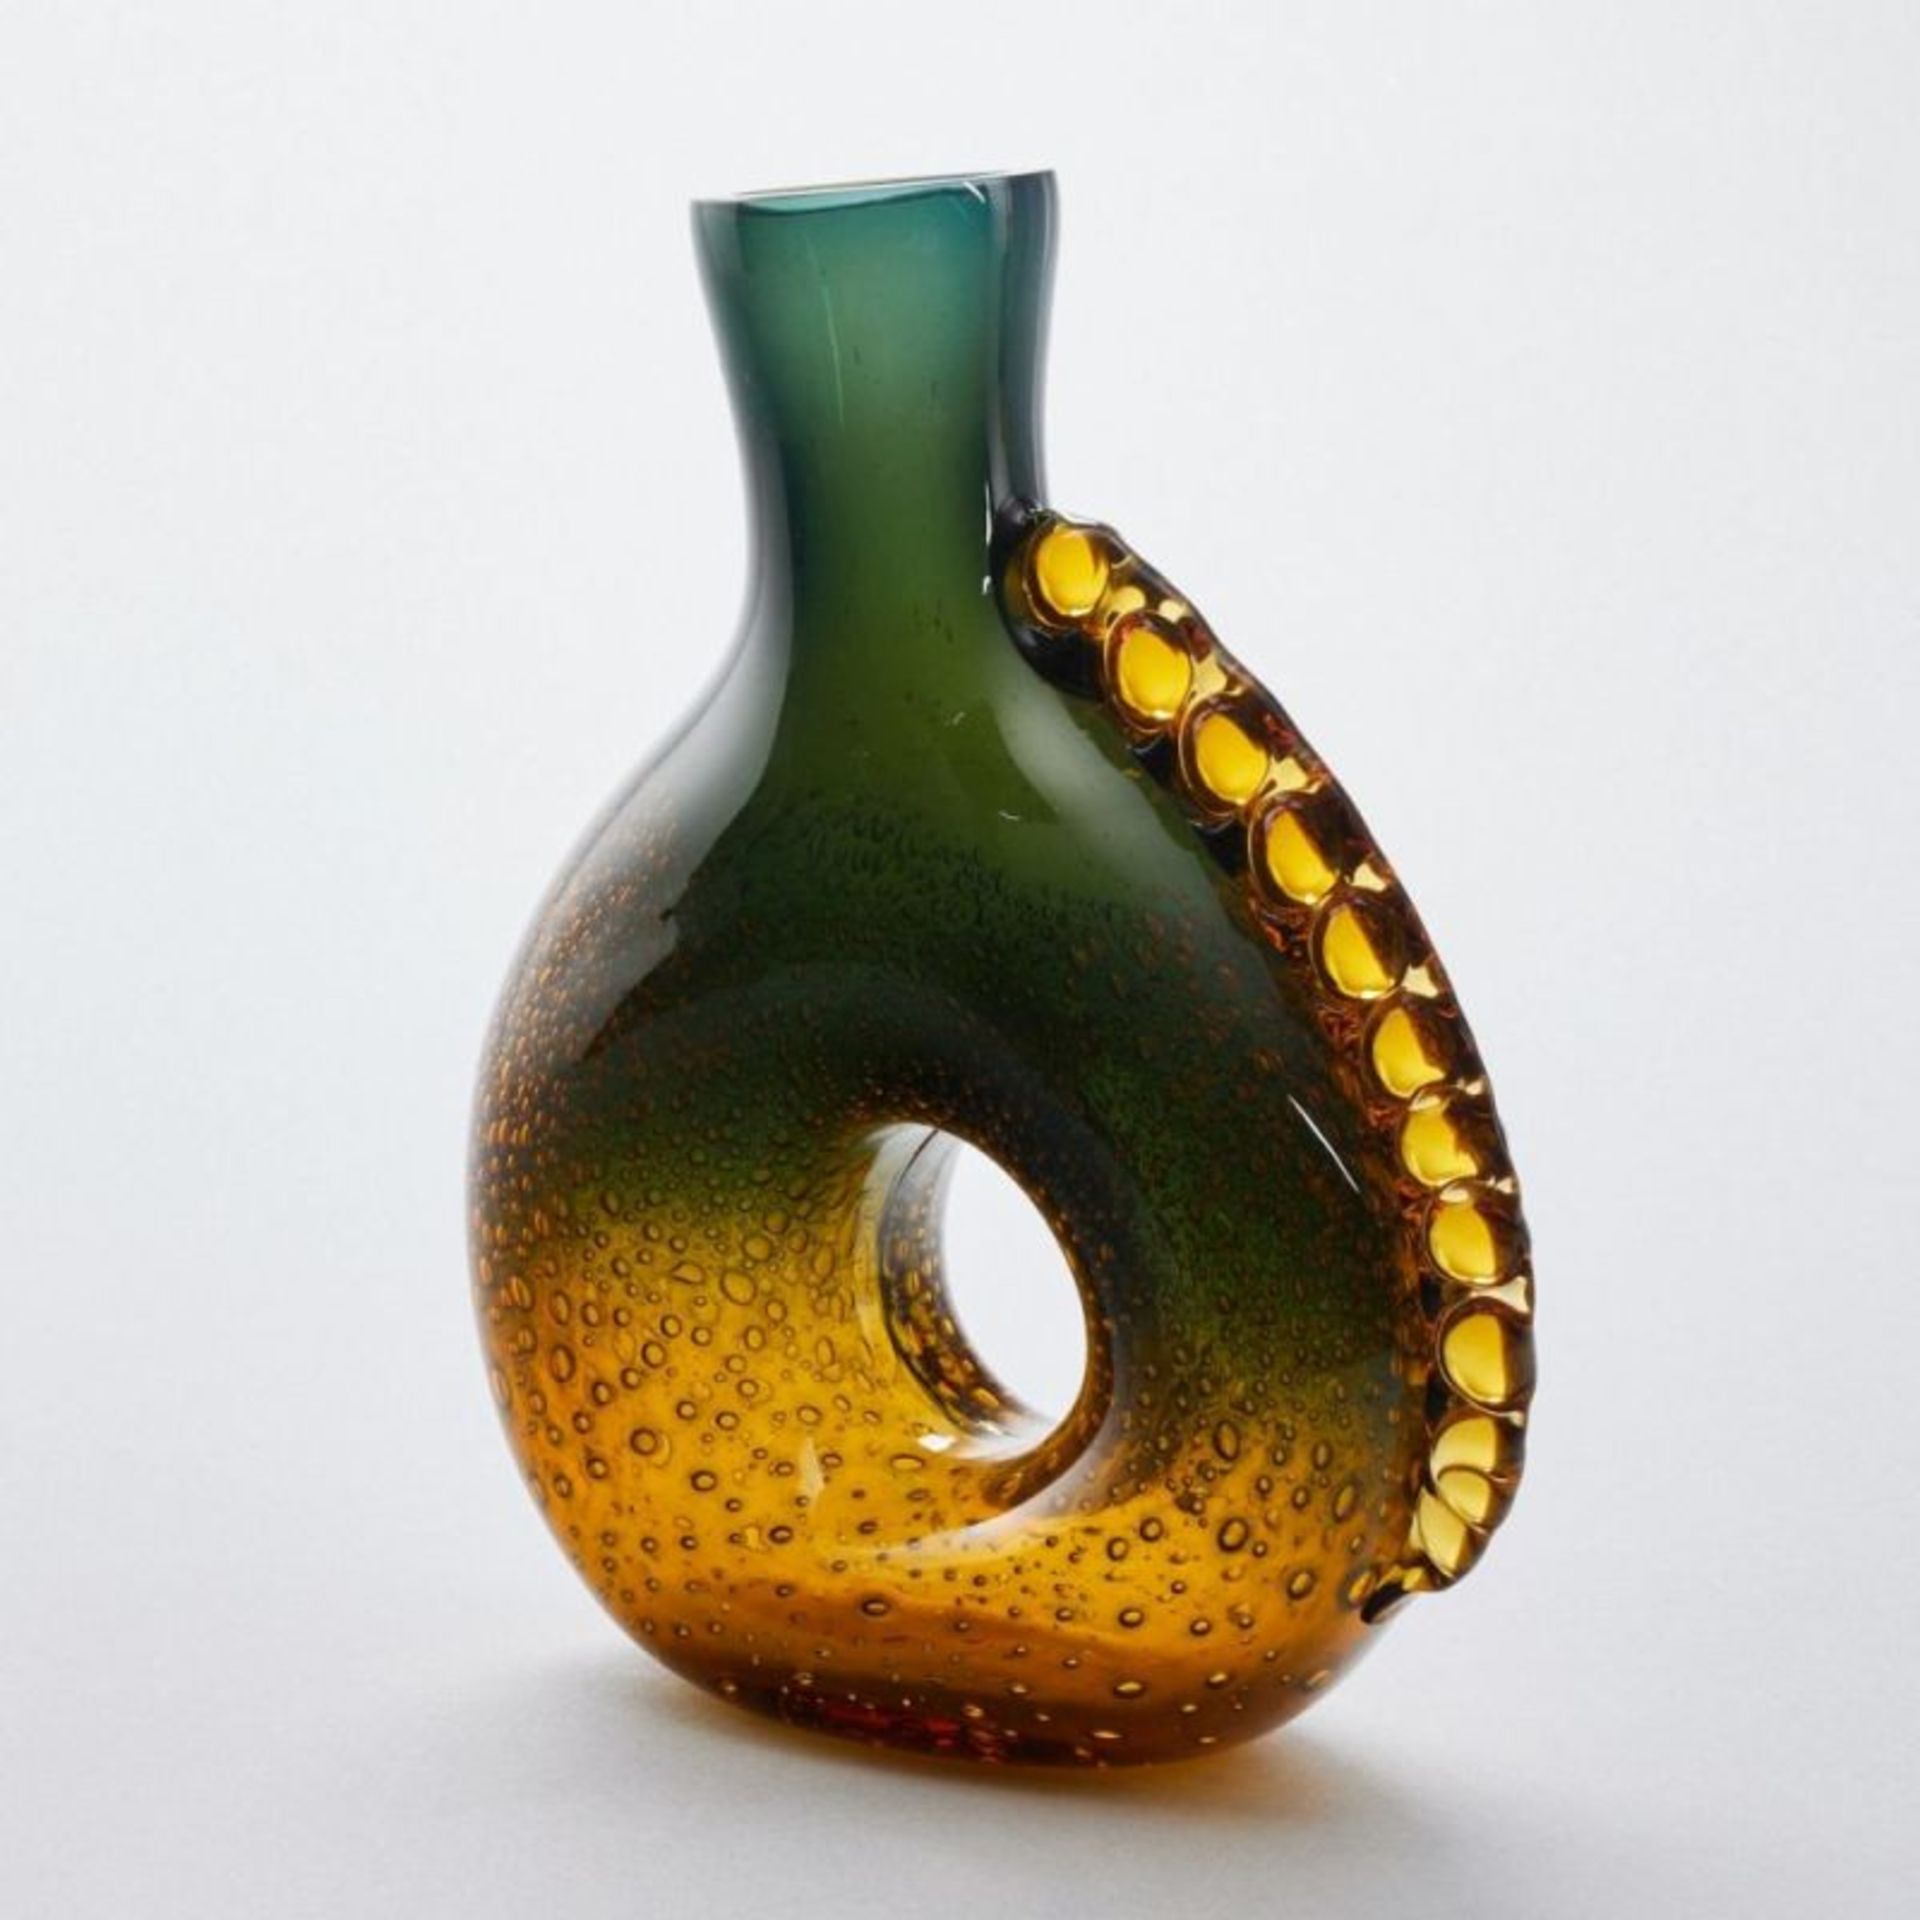 Vase in Ringform mit aufgeschmolzenem Band. Murano. - Bild 2 aus 2